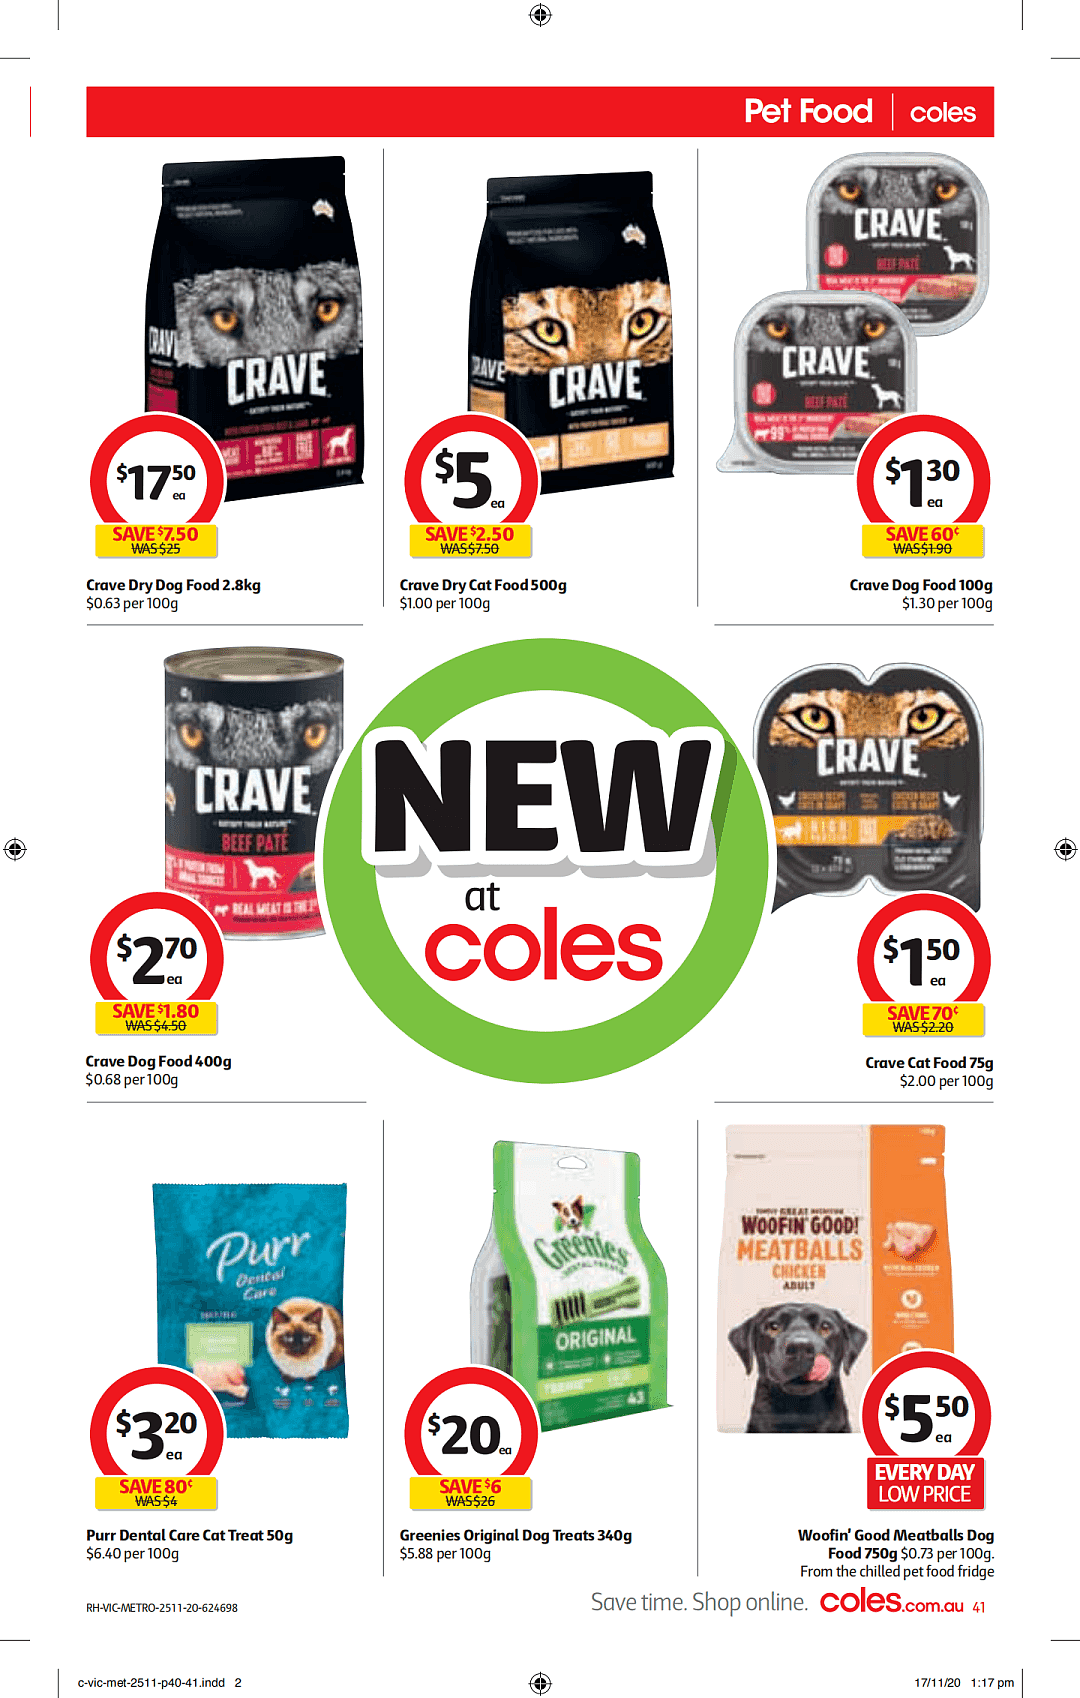 Coles 11月25日-12月1日折扣，清洁用品、冰淇淋半价 - 41